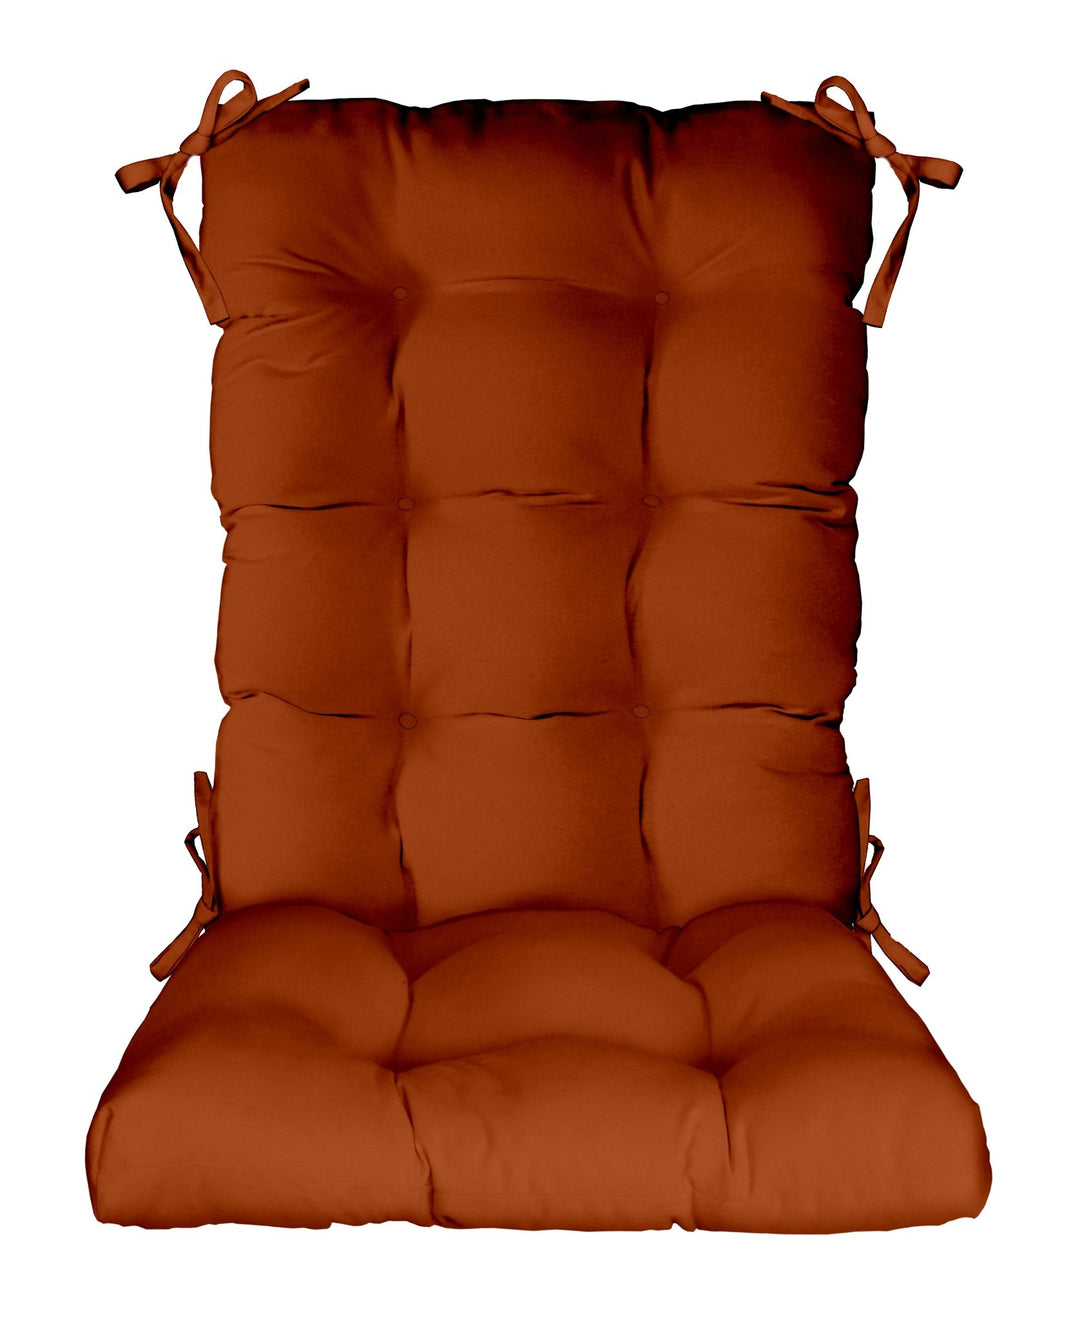 Tufted Rocker Rocking Chair Cushions, Standard, Sunbrella Solids - RSH Decor